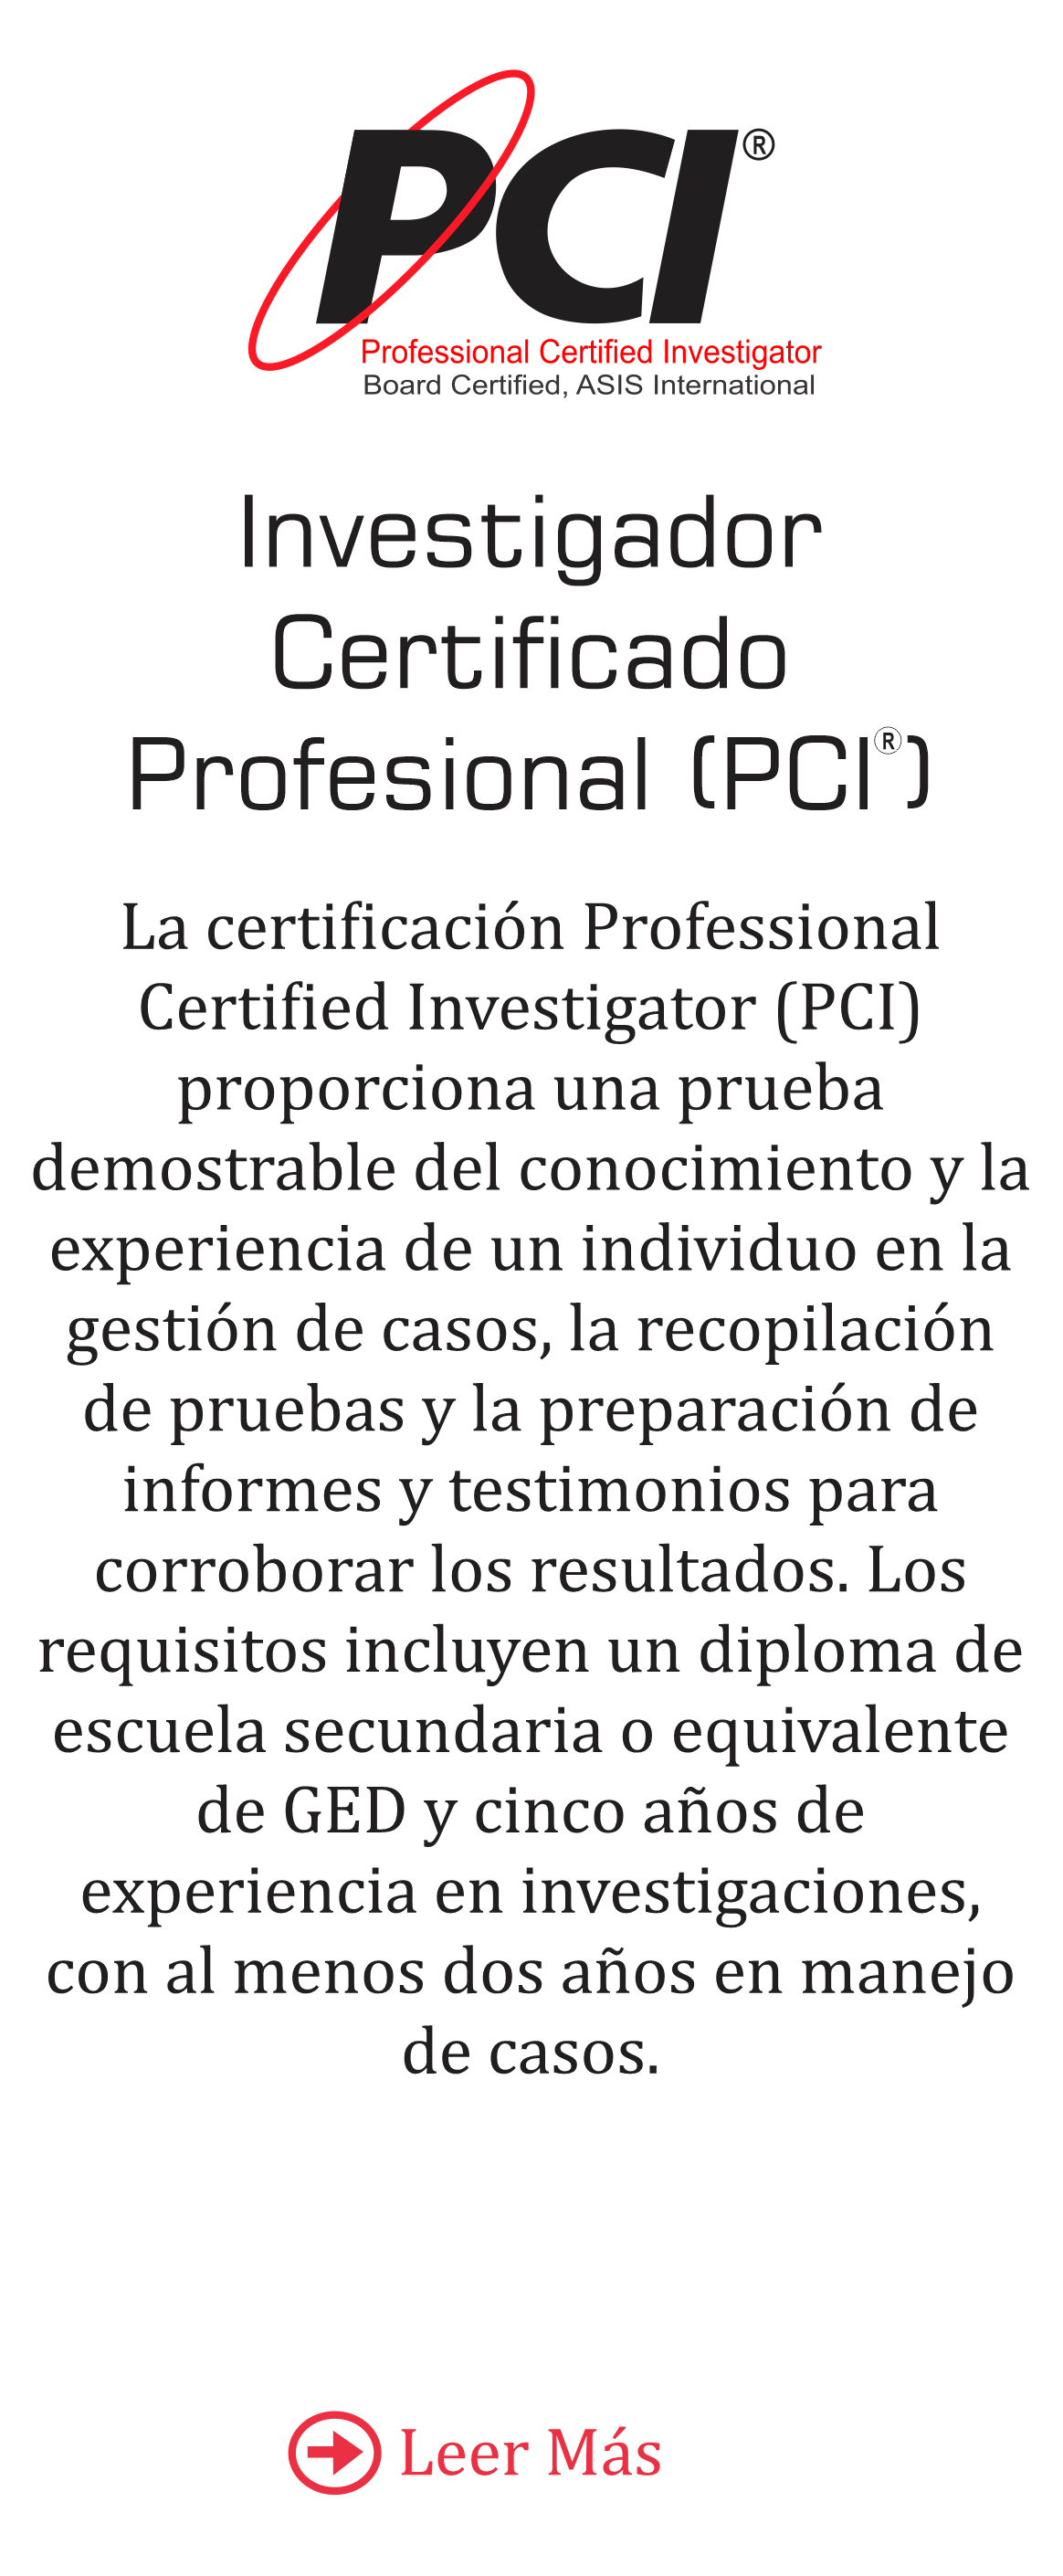 Professional Certified Investigator - PCI